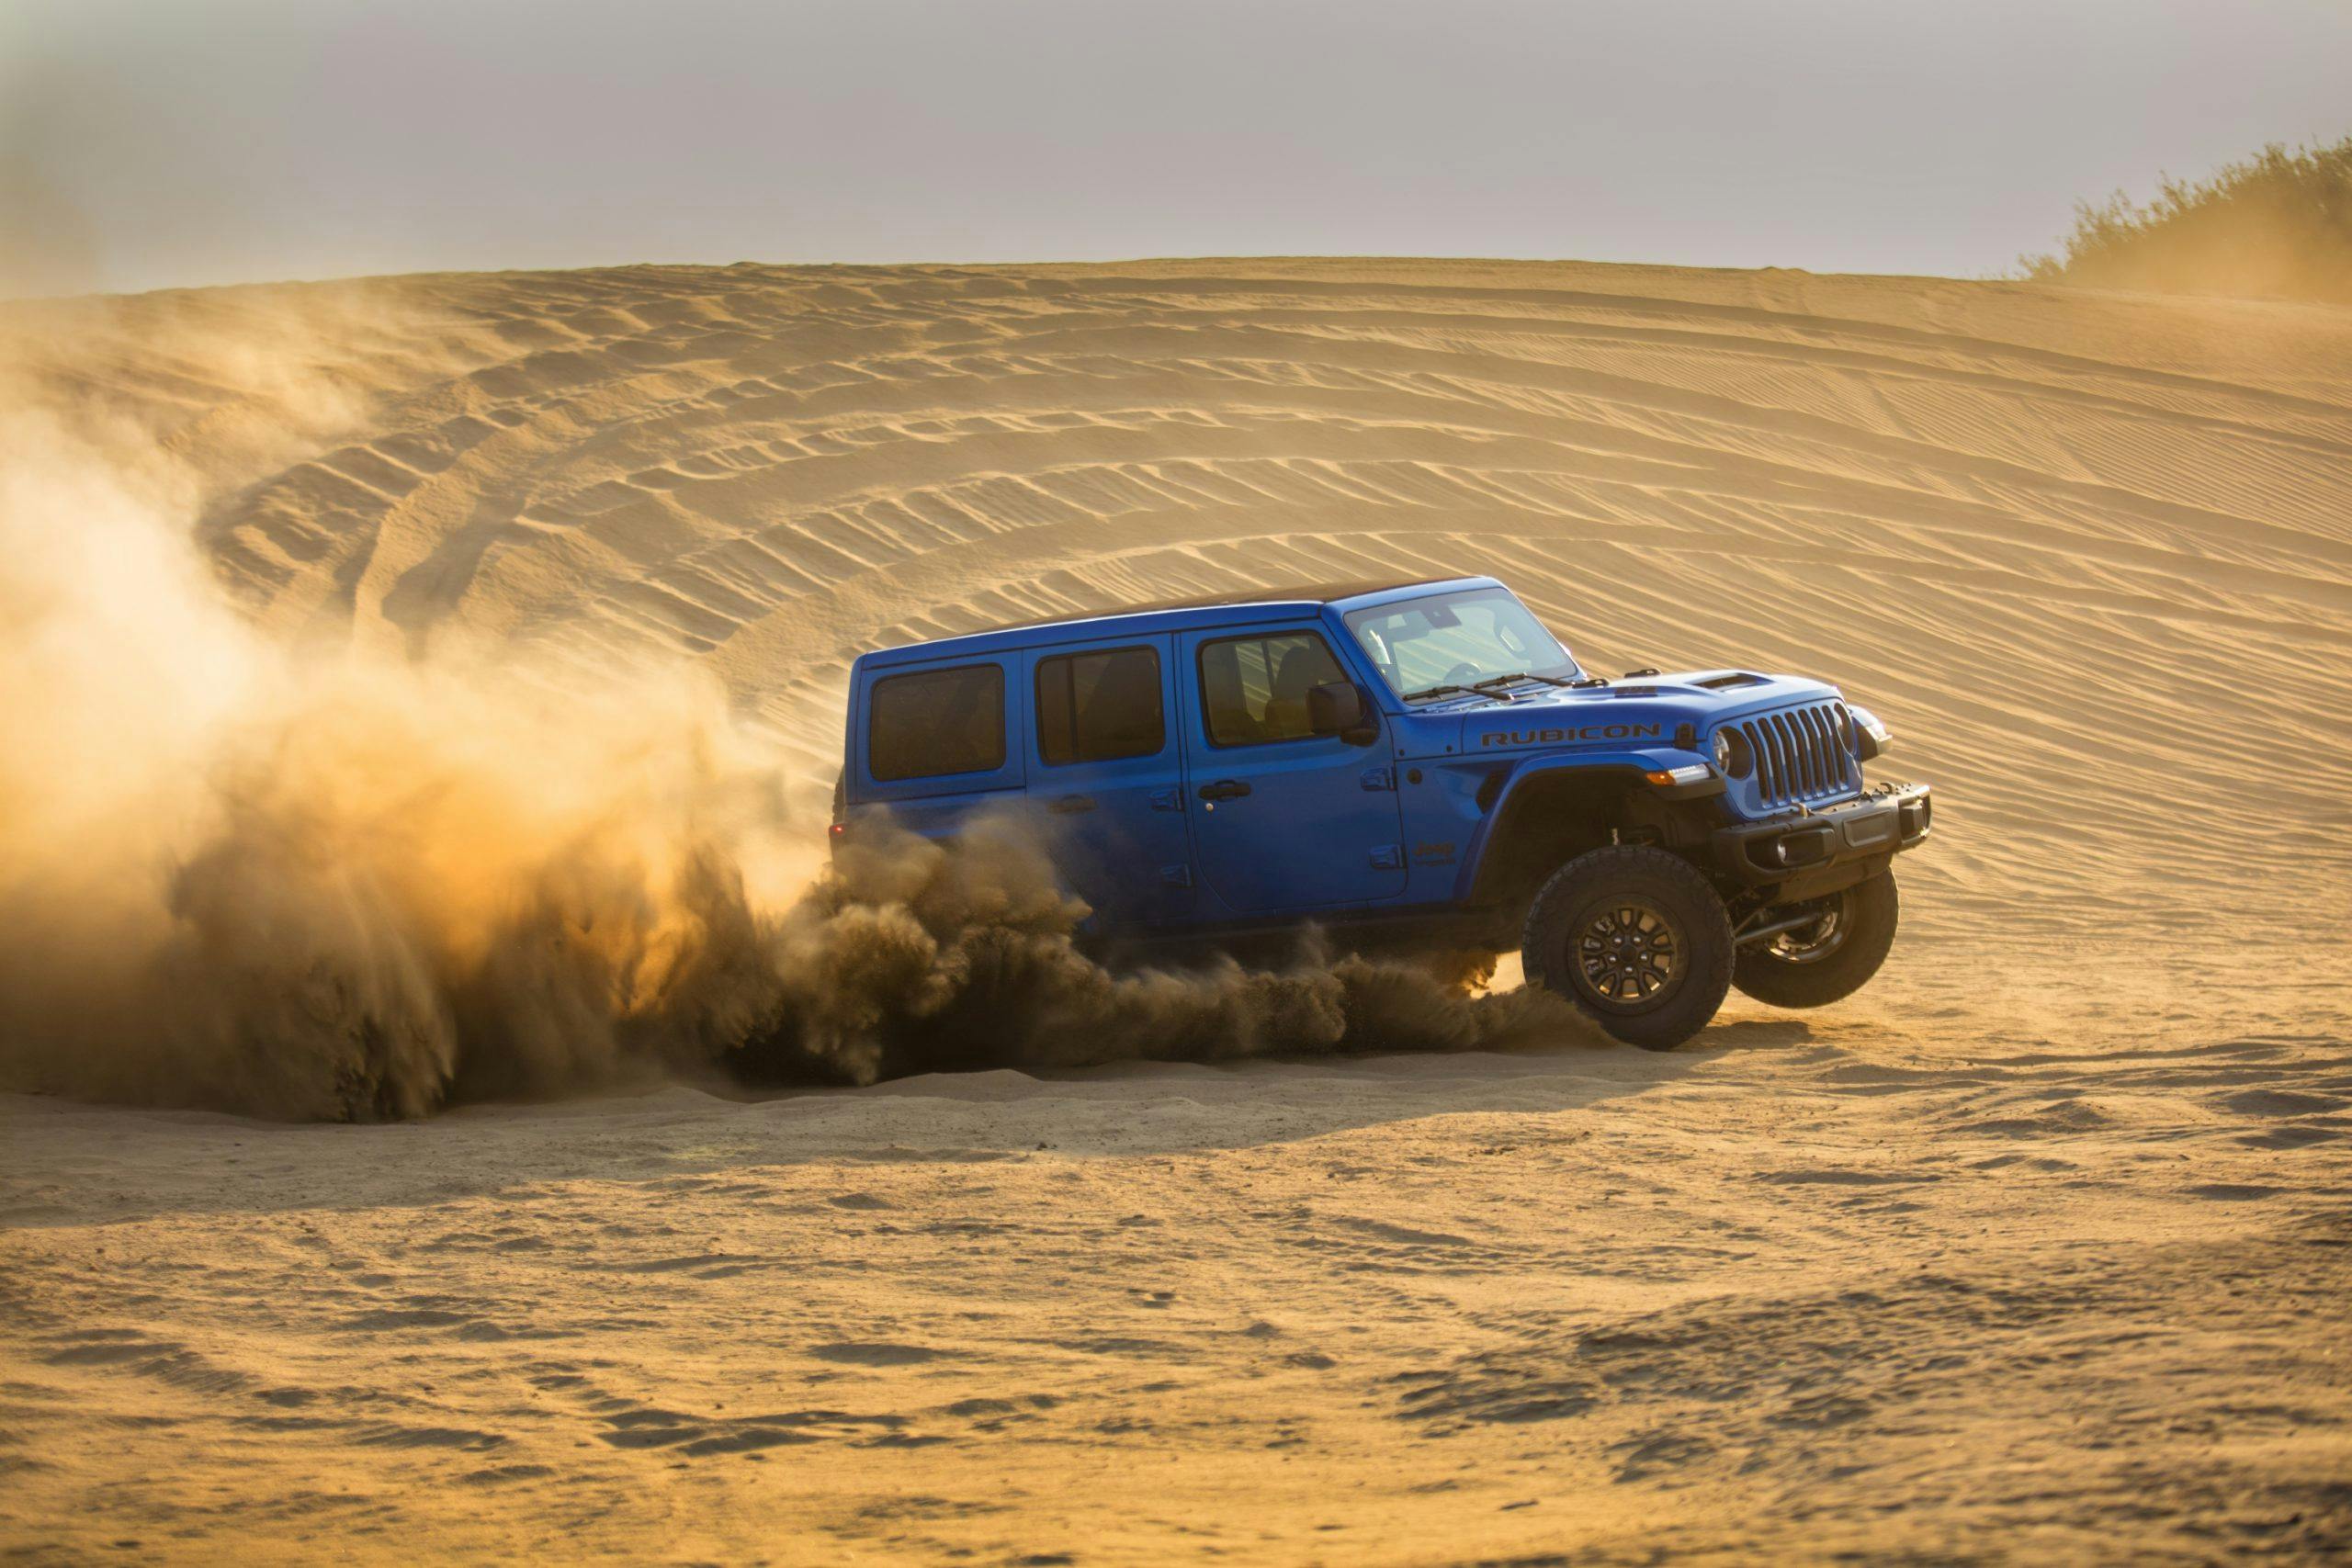 2021 Jeep Wrangler Rubicon 392 blue sand flingin